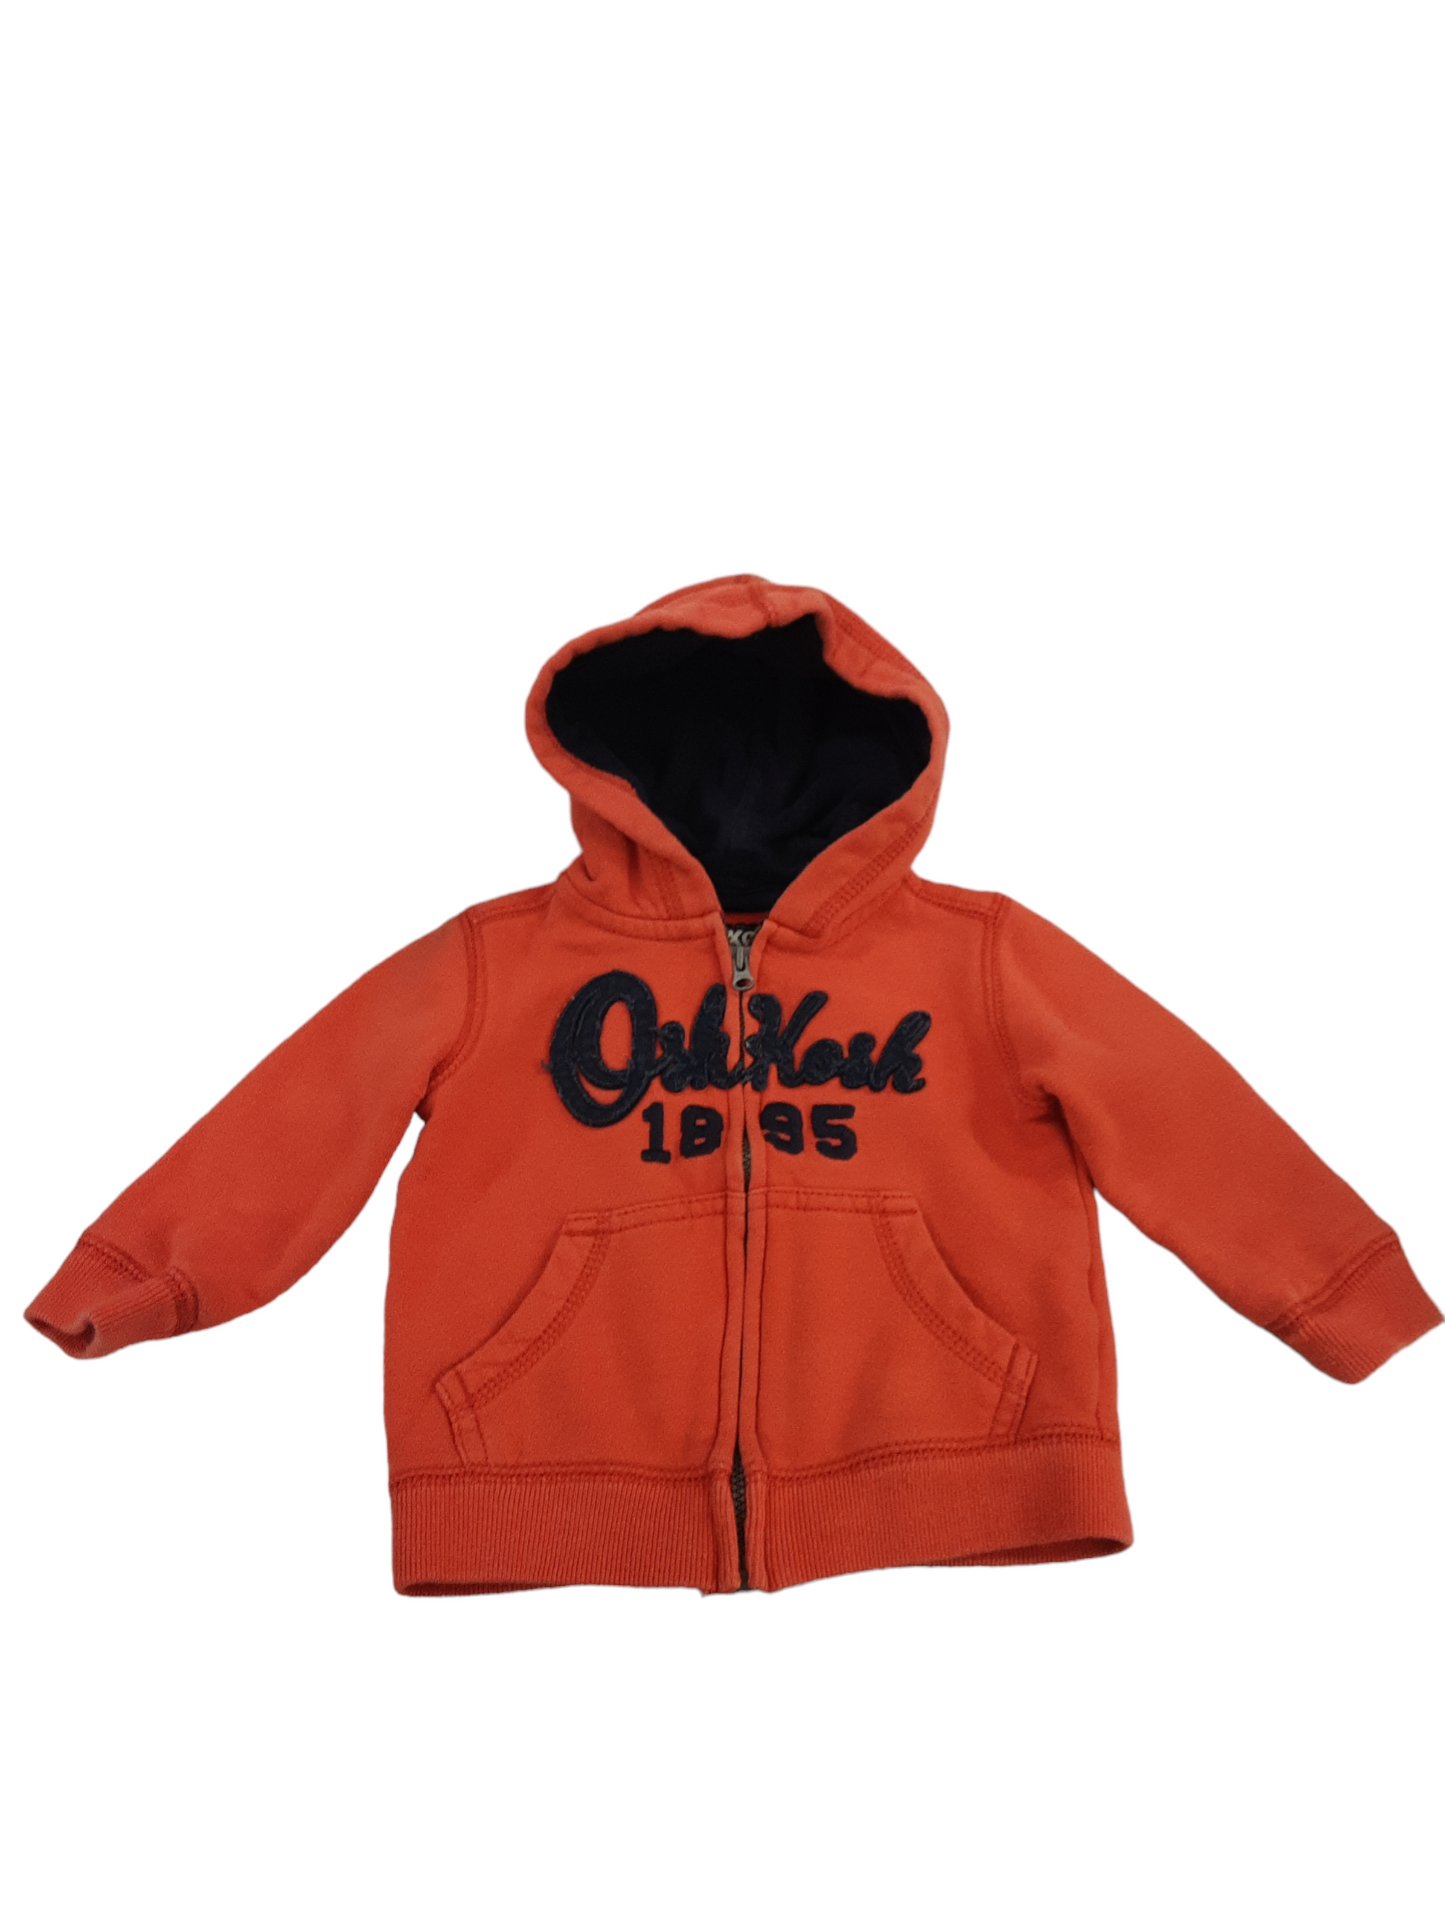 Orange and navy fleece jacket size 9months